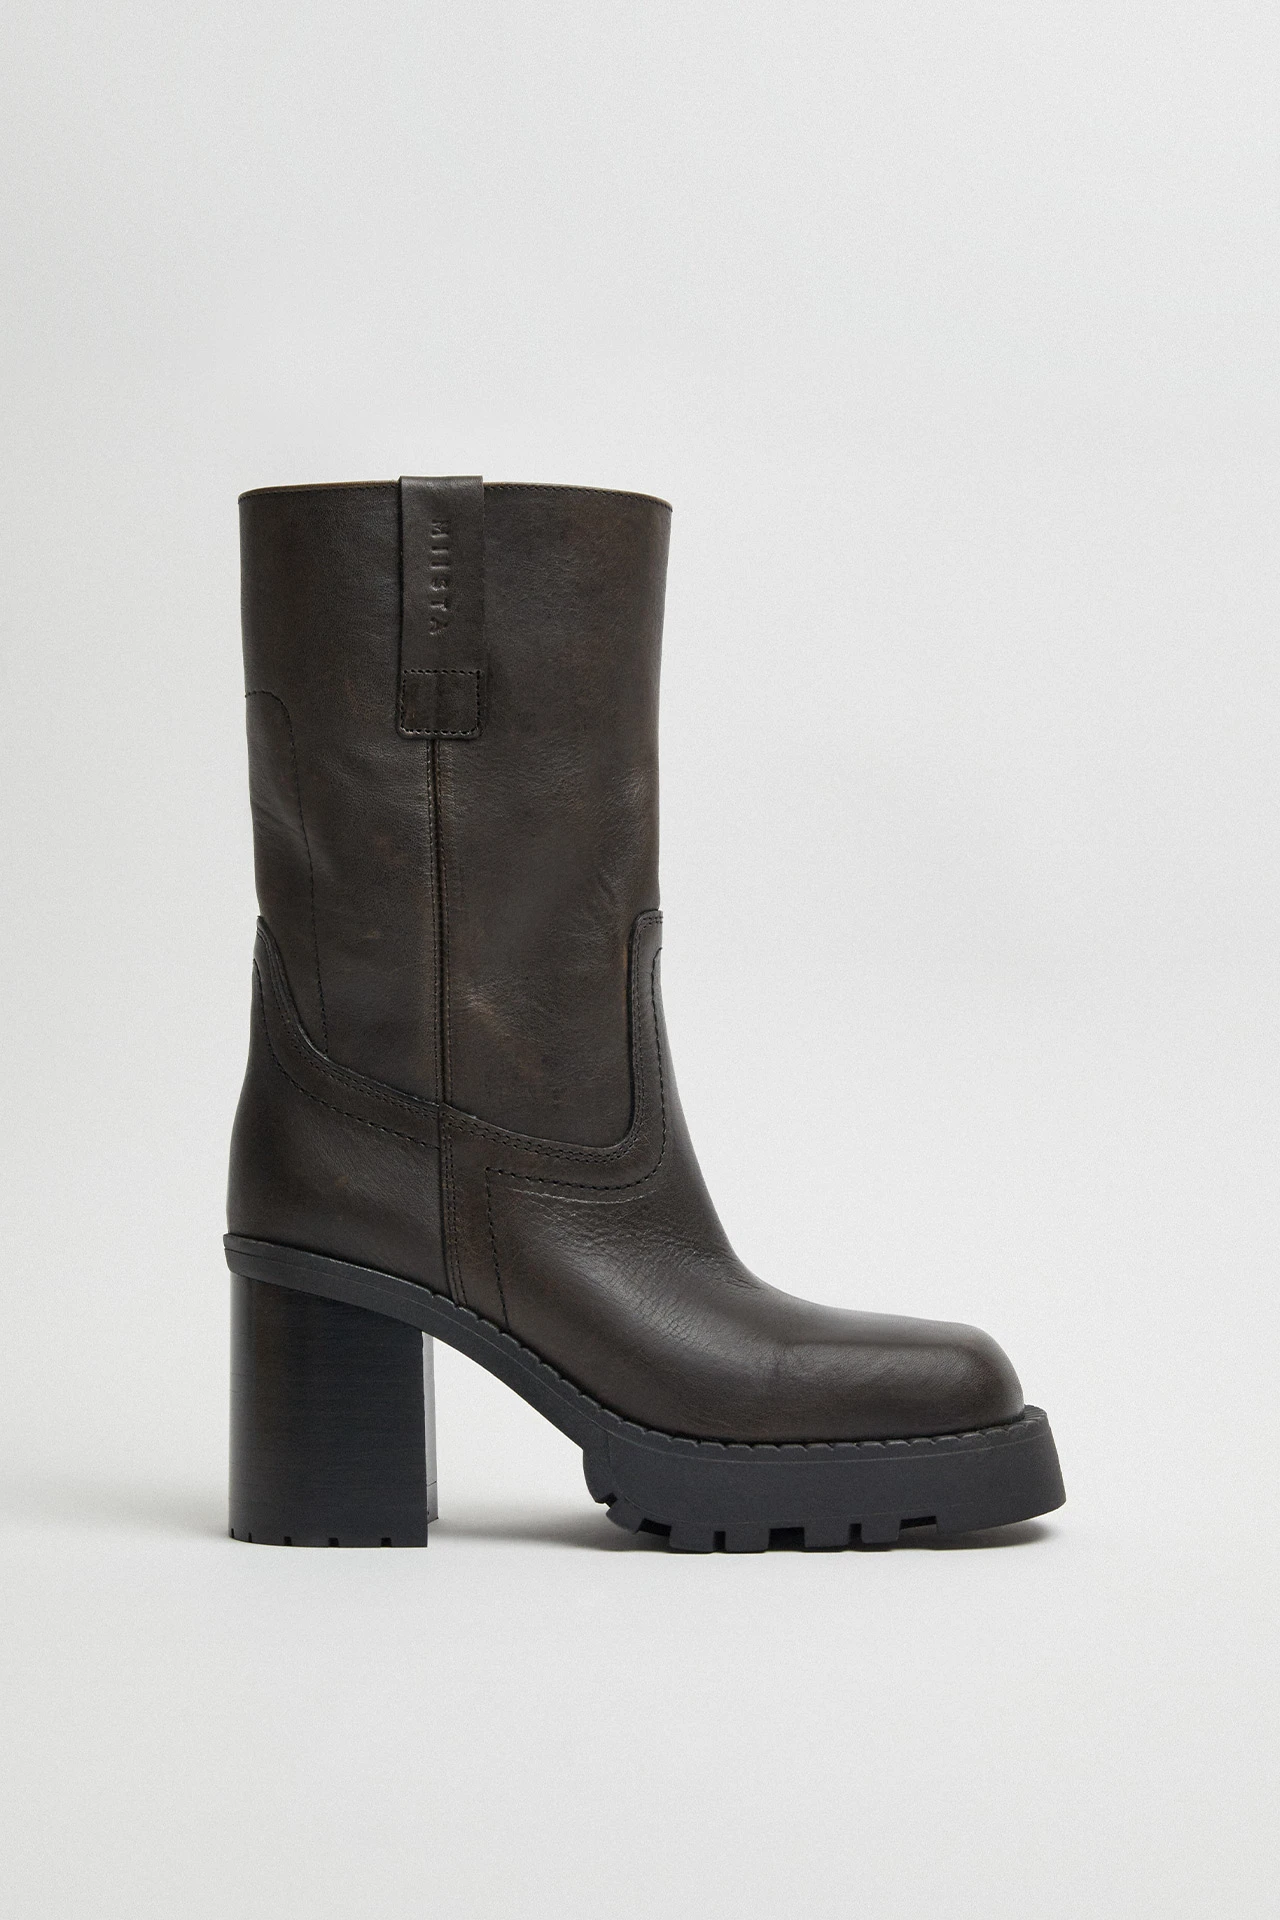 E8-daiane-brown-boots-02